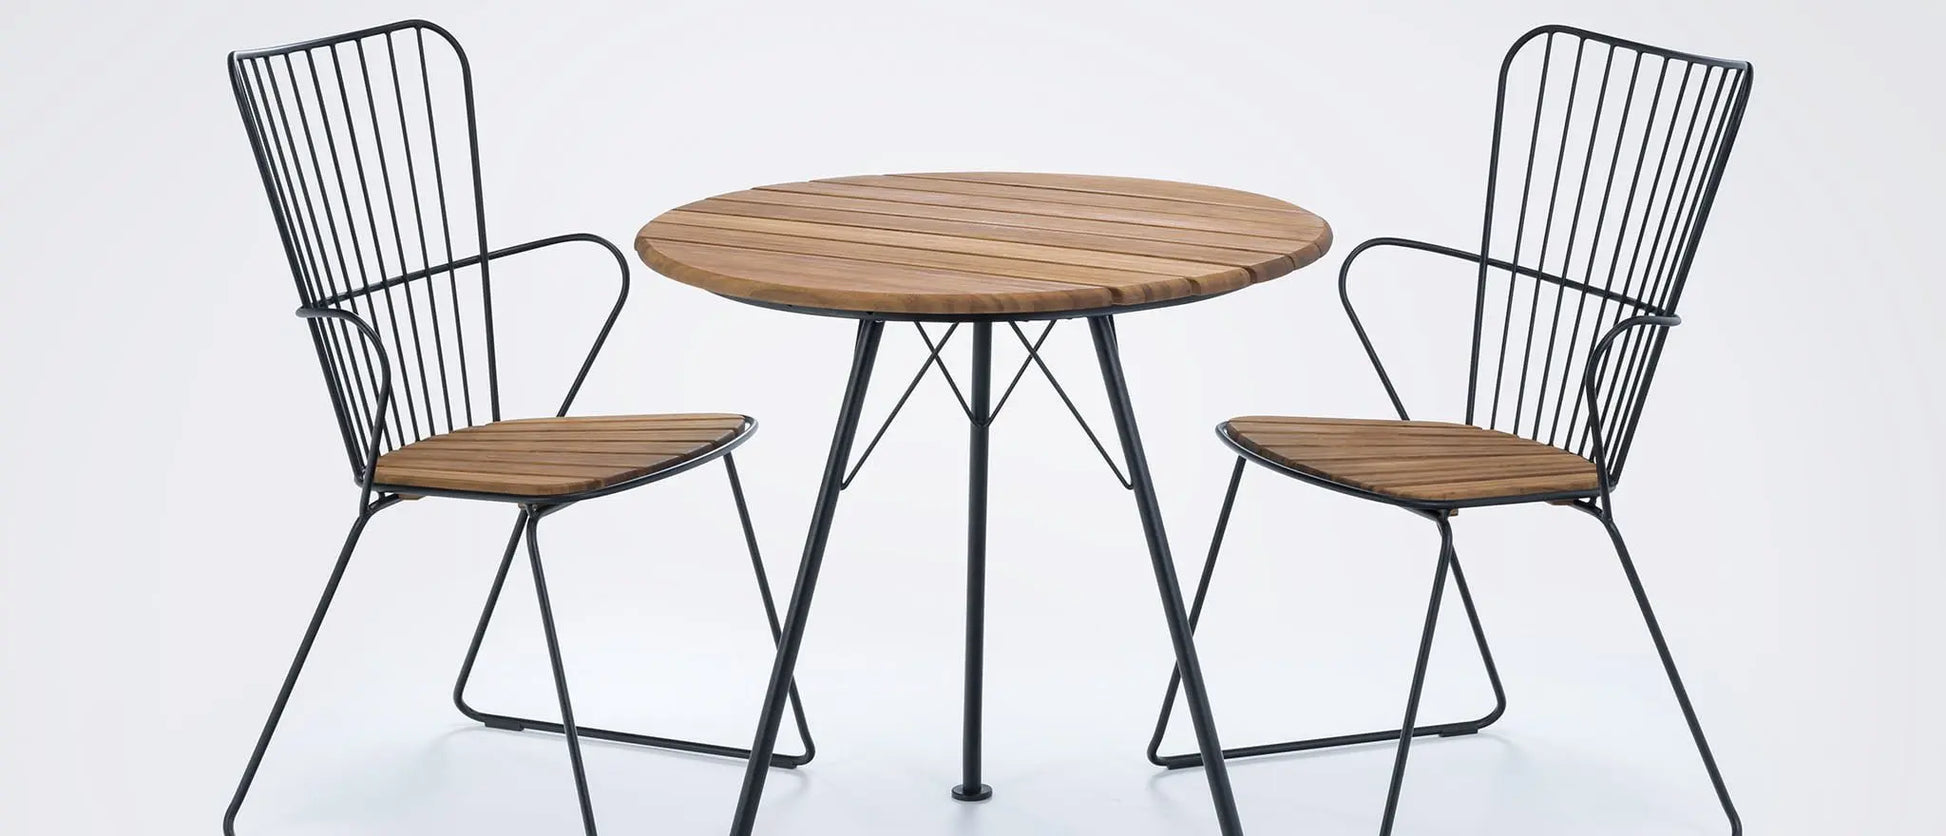 Circle 74 Cafe Table Danish Furniture Ltd